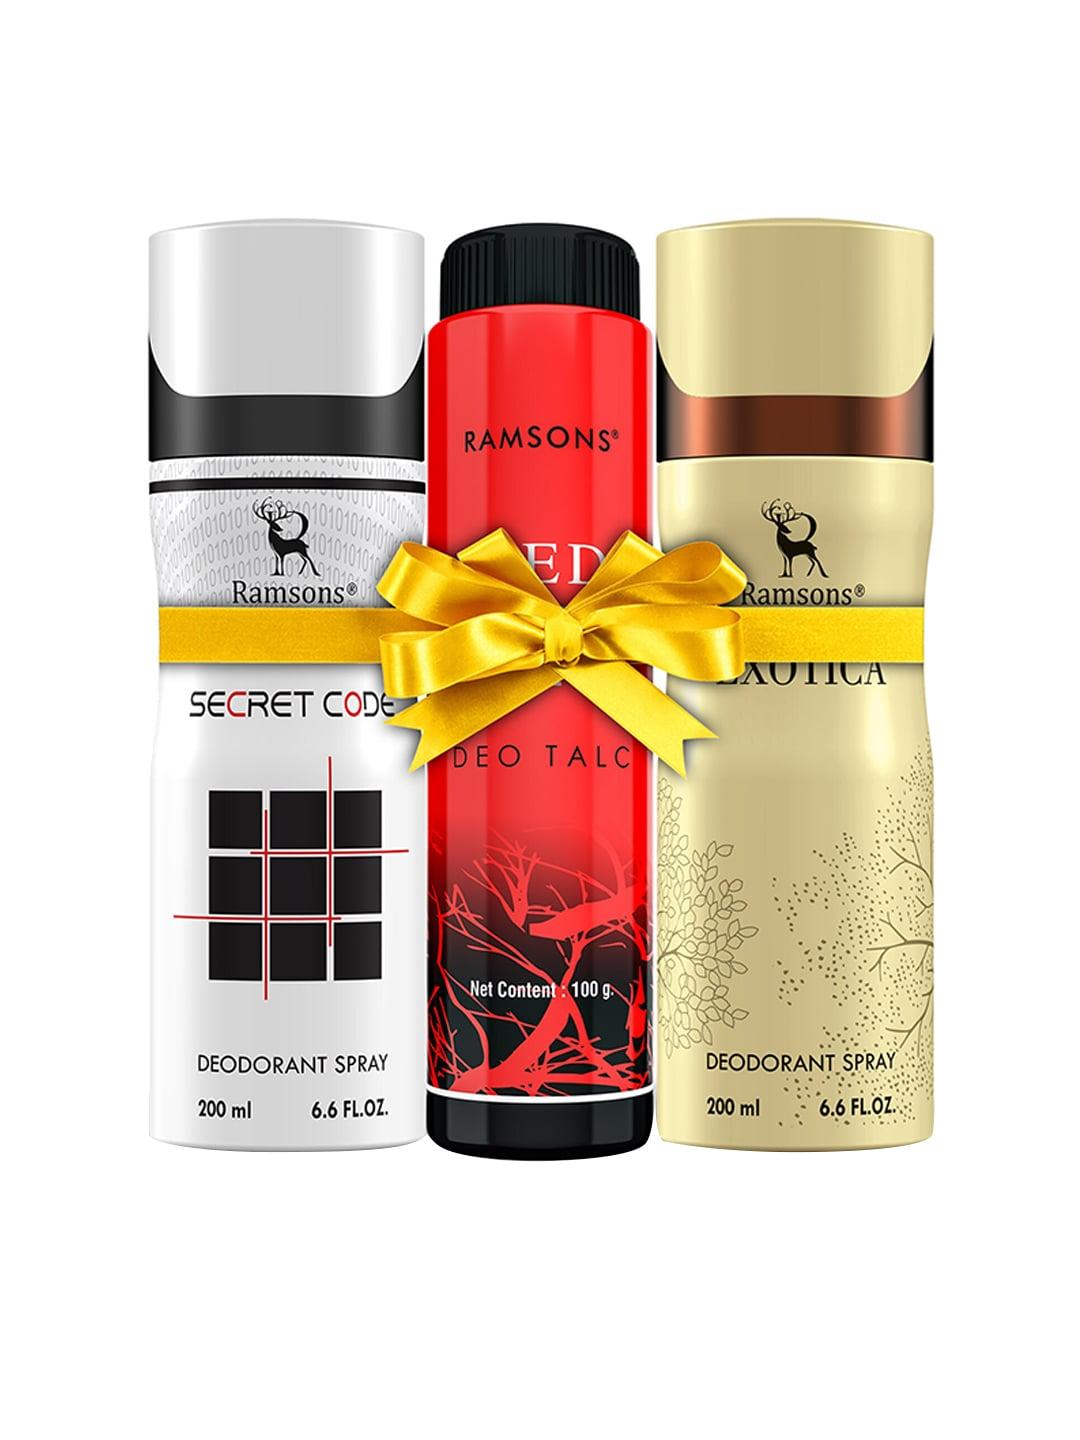 ramsons-secret-code-deodorant-200-ml+exotica-deodorant-200-ml+-red-zx-deo-talc-100-g